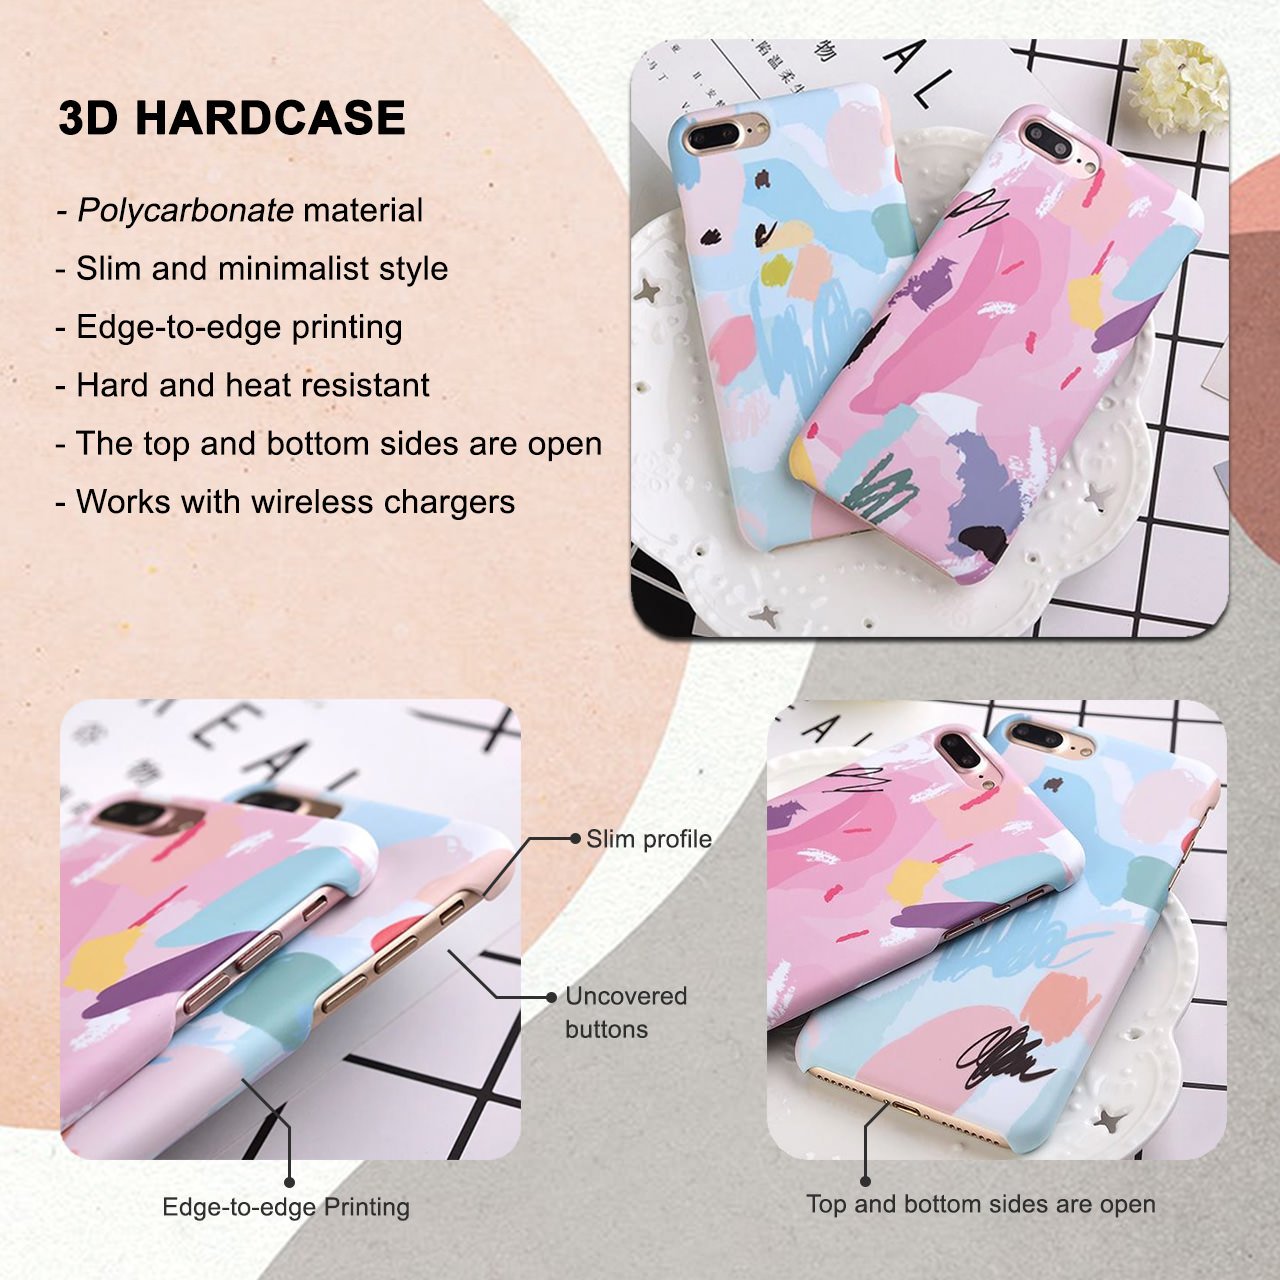 Colorful Bulldog Art iPhone 6 / 6s Plus Case